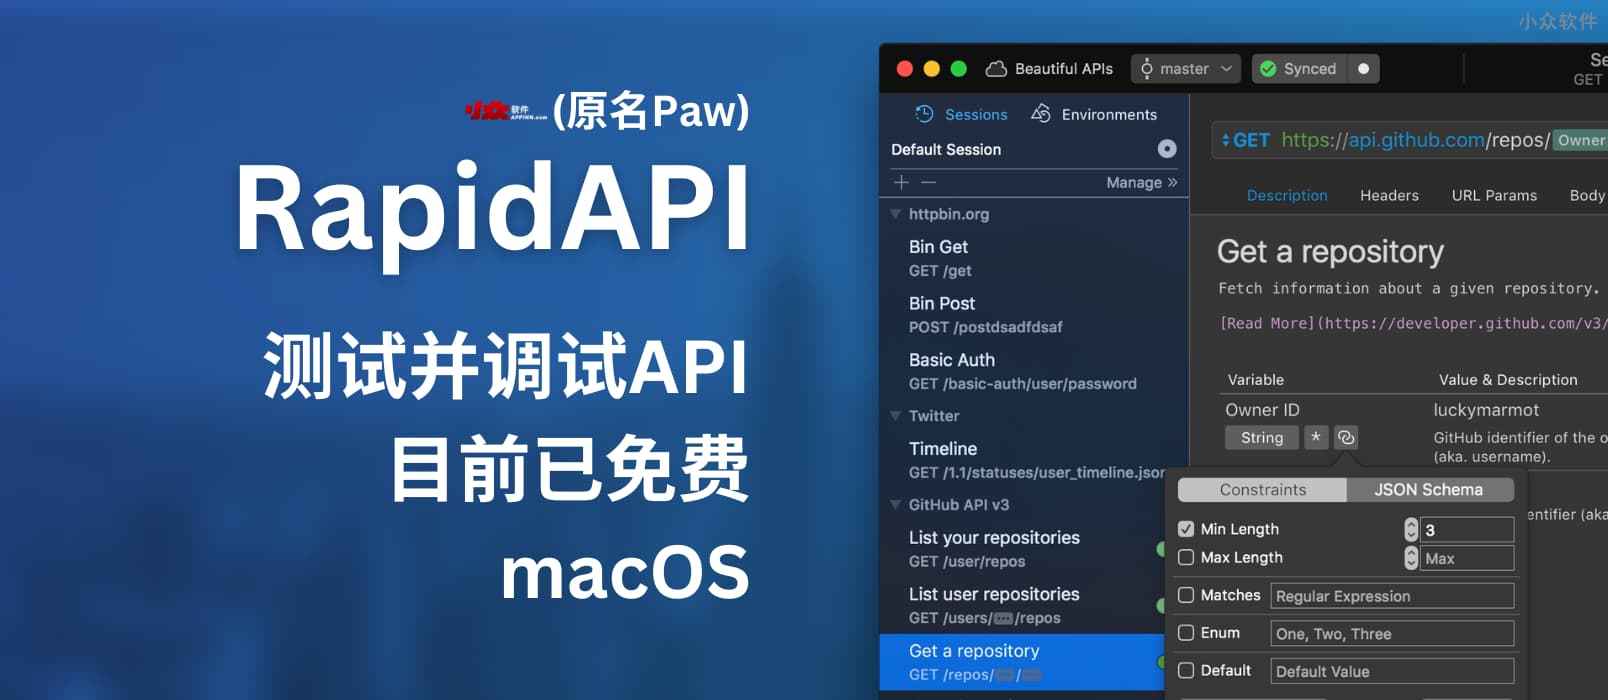 RapidAPI - 原名 Paw，用于测试并调试 API，目前已免费[macOS]